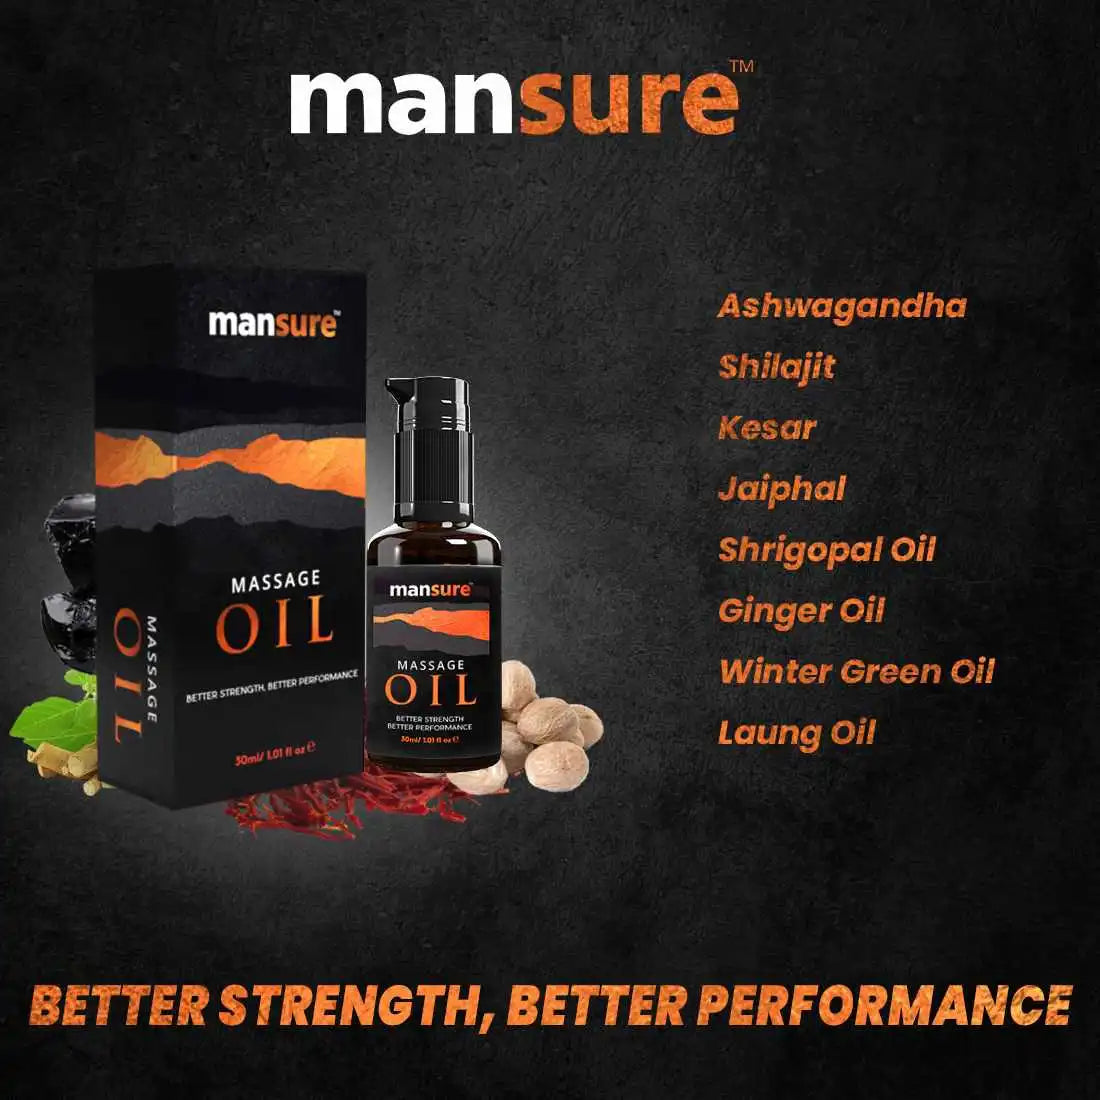 ManSure Massage Oil for Men Contains Ashwagandha, Shilajit, Kesar, Jaiphal, Shrigopa Oil and Other Potent Ingredients